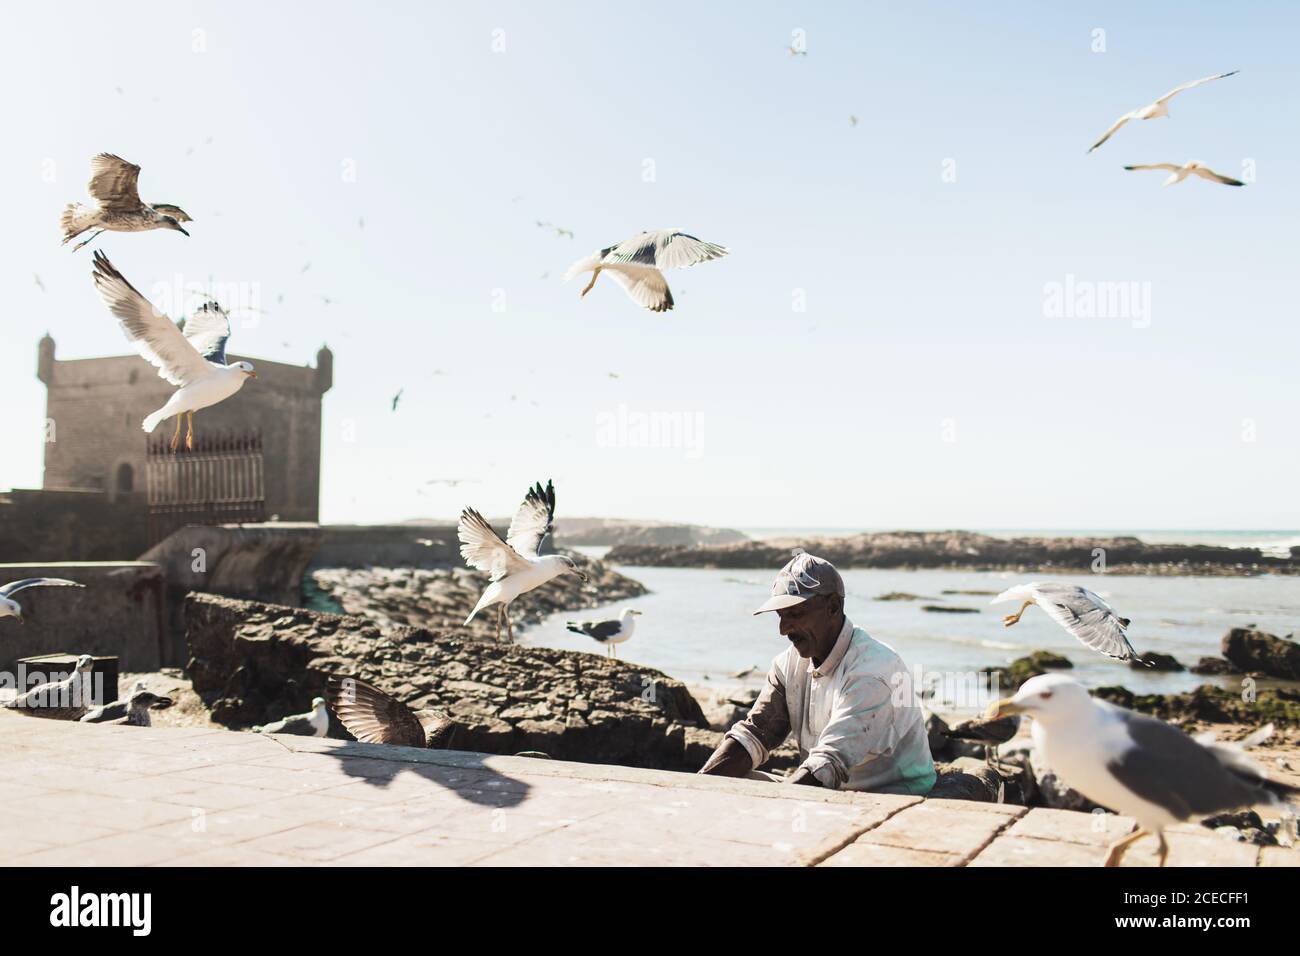 ESSAOUIRA, MOROCCO - SEPTEMBER 10, 2019: Old fisherman feeding seagulls in harbor Essaouira, Morocco. Many birds flying around. Stock Photo